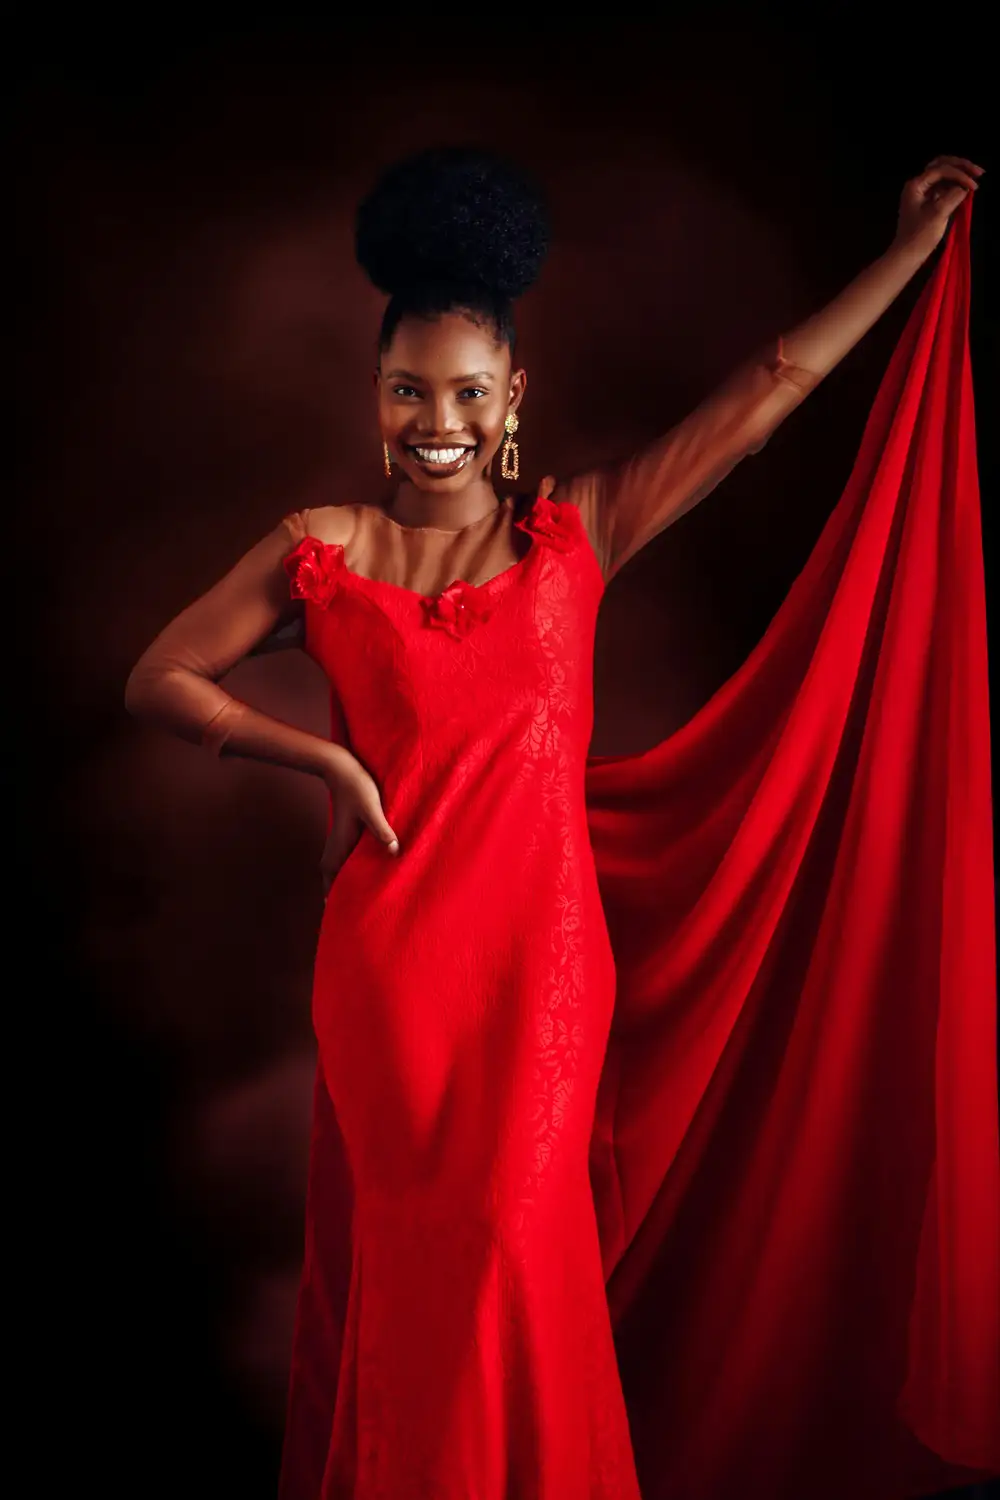 Smiling lady wearing red dress